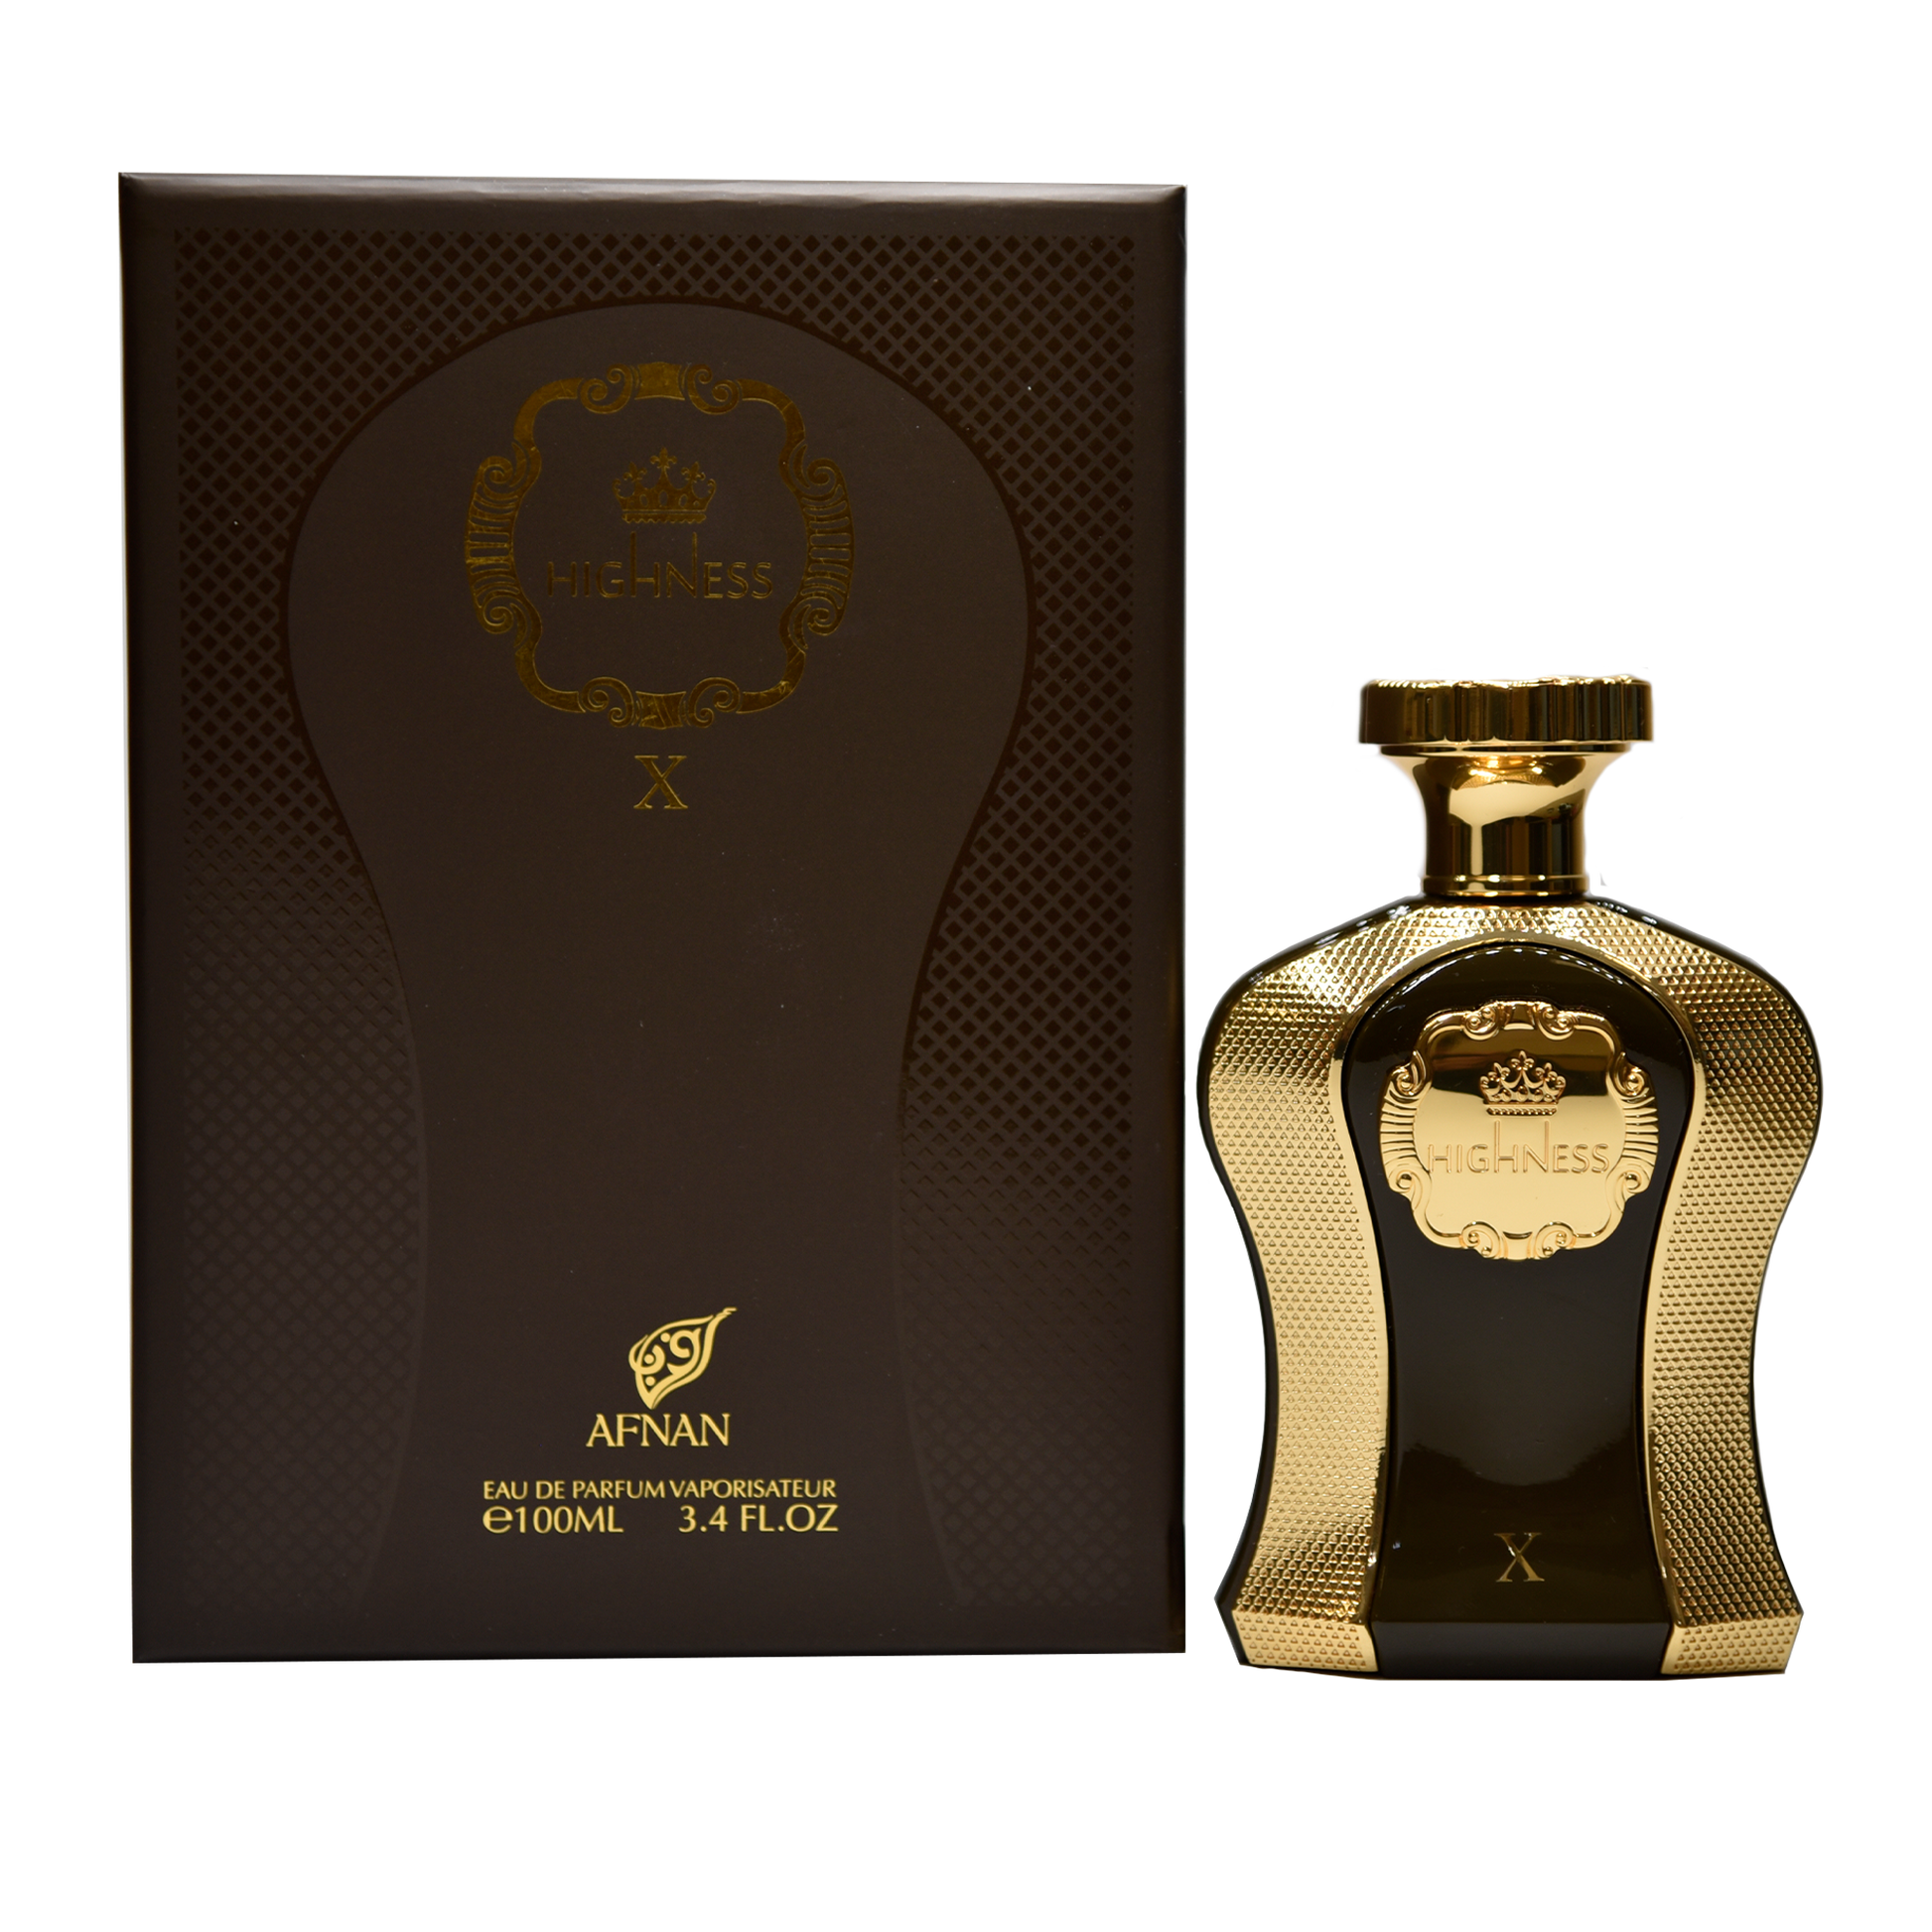 Highness X Brown - Afnan - 3.4 oz - Eau de Parfum - Fragrance - 6290171070177 - Fragrance